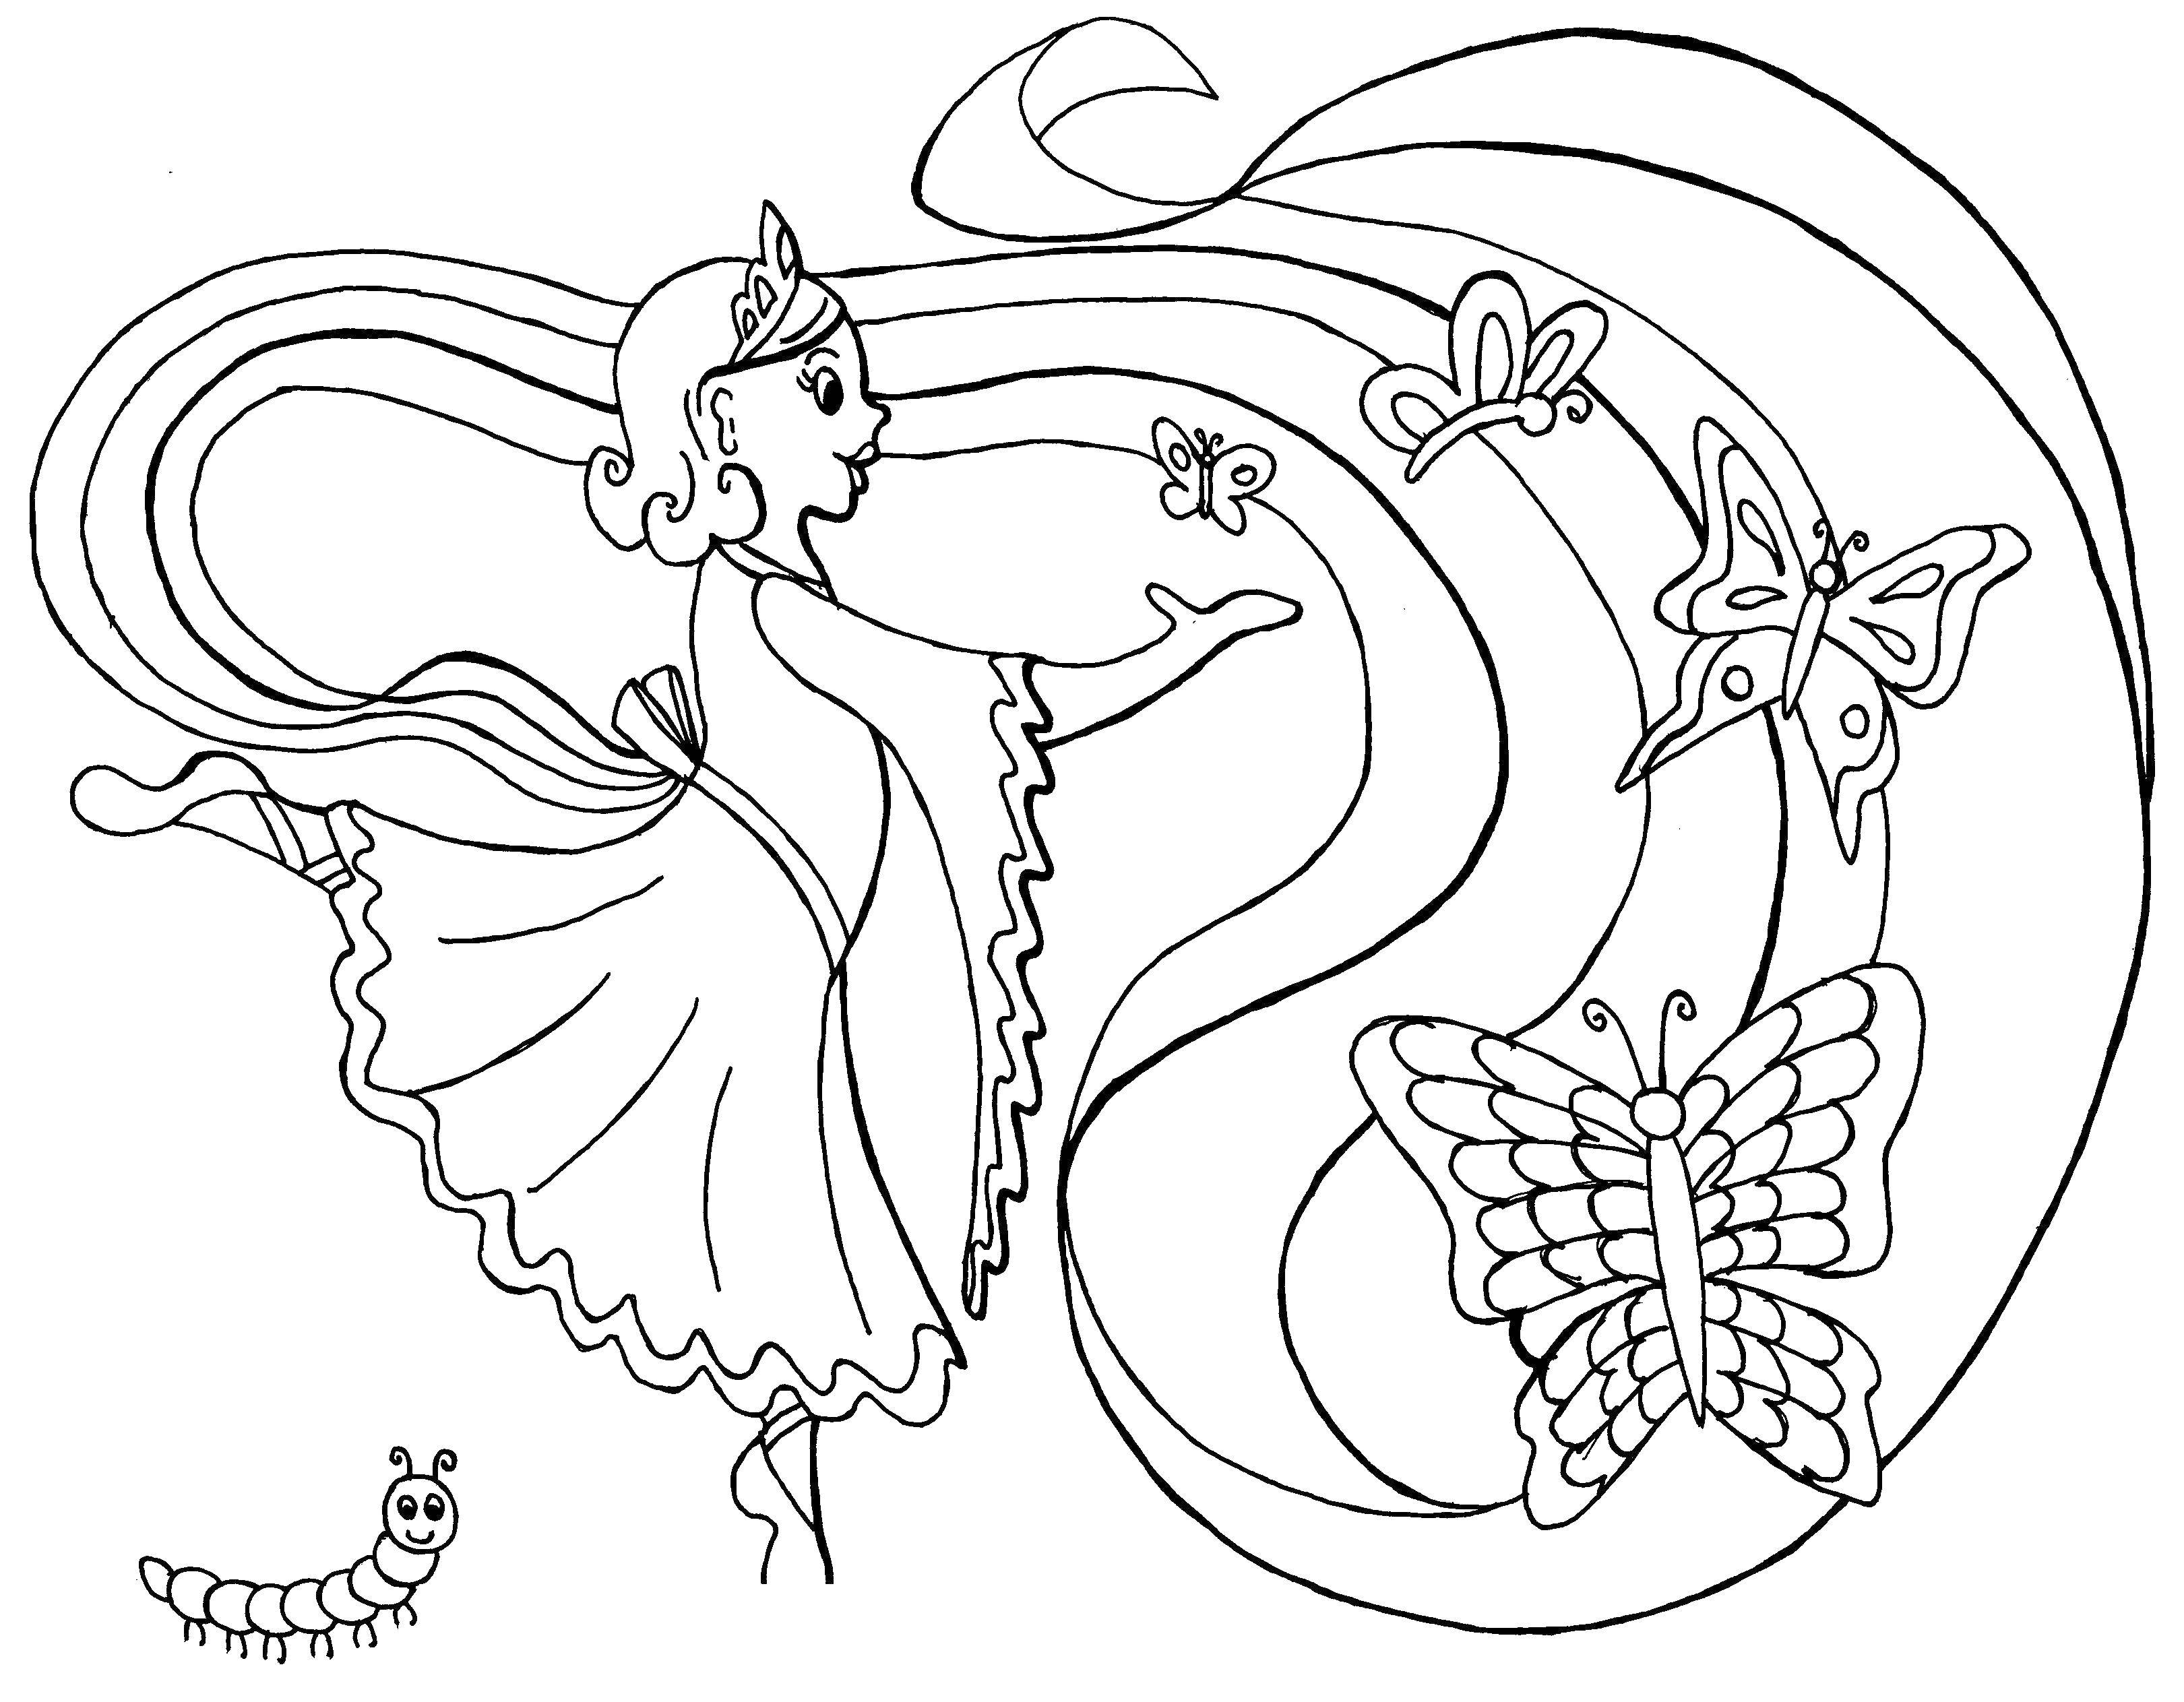 Название: Раскраска Принцесса с бабочками. Категория: Принцессы. Теги: принцессы, бабочки.